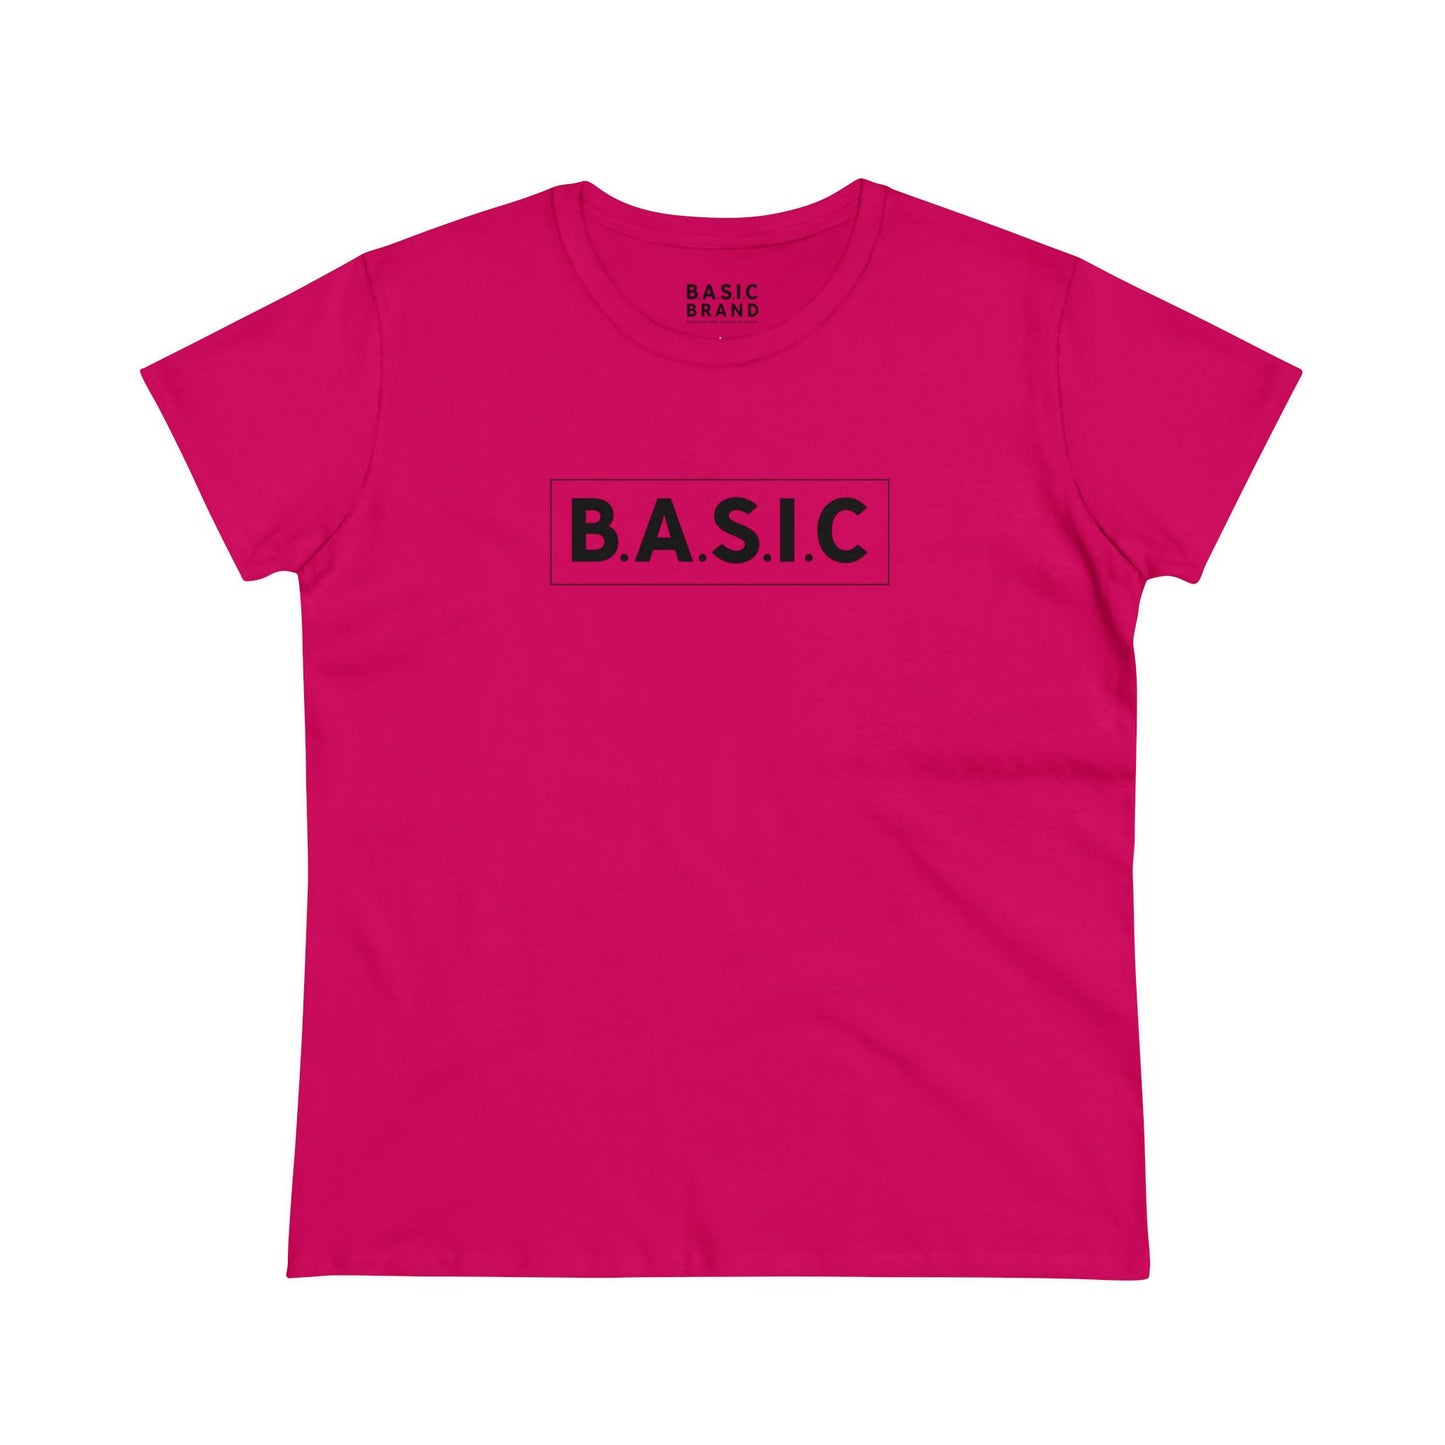 Women's B.A.S.I.C "Medium Boxed Logo" Tee Shirt